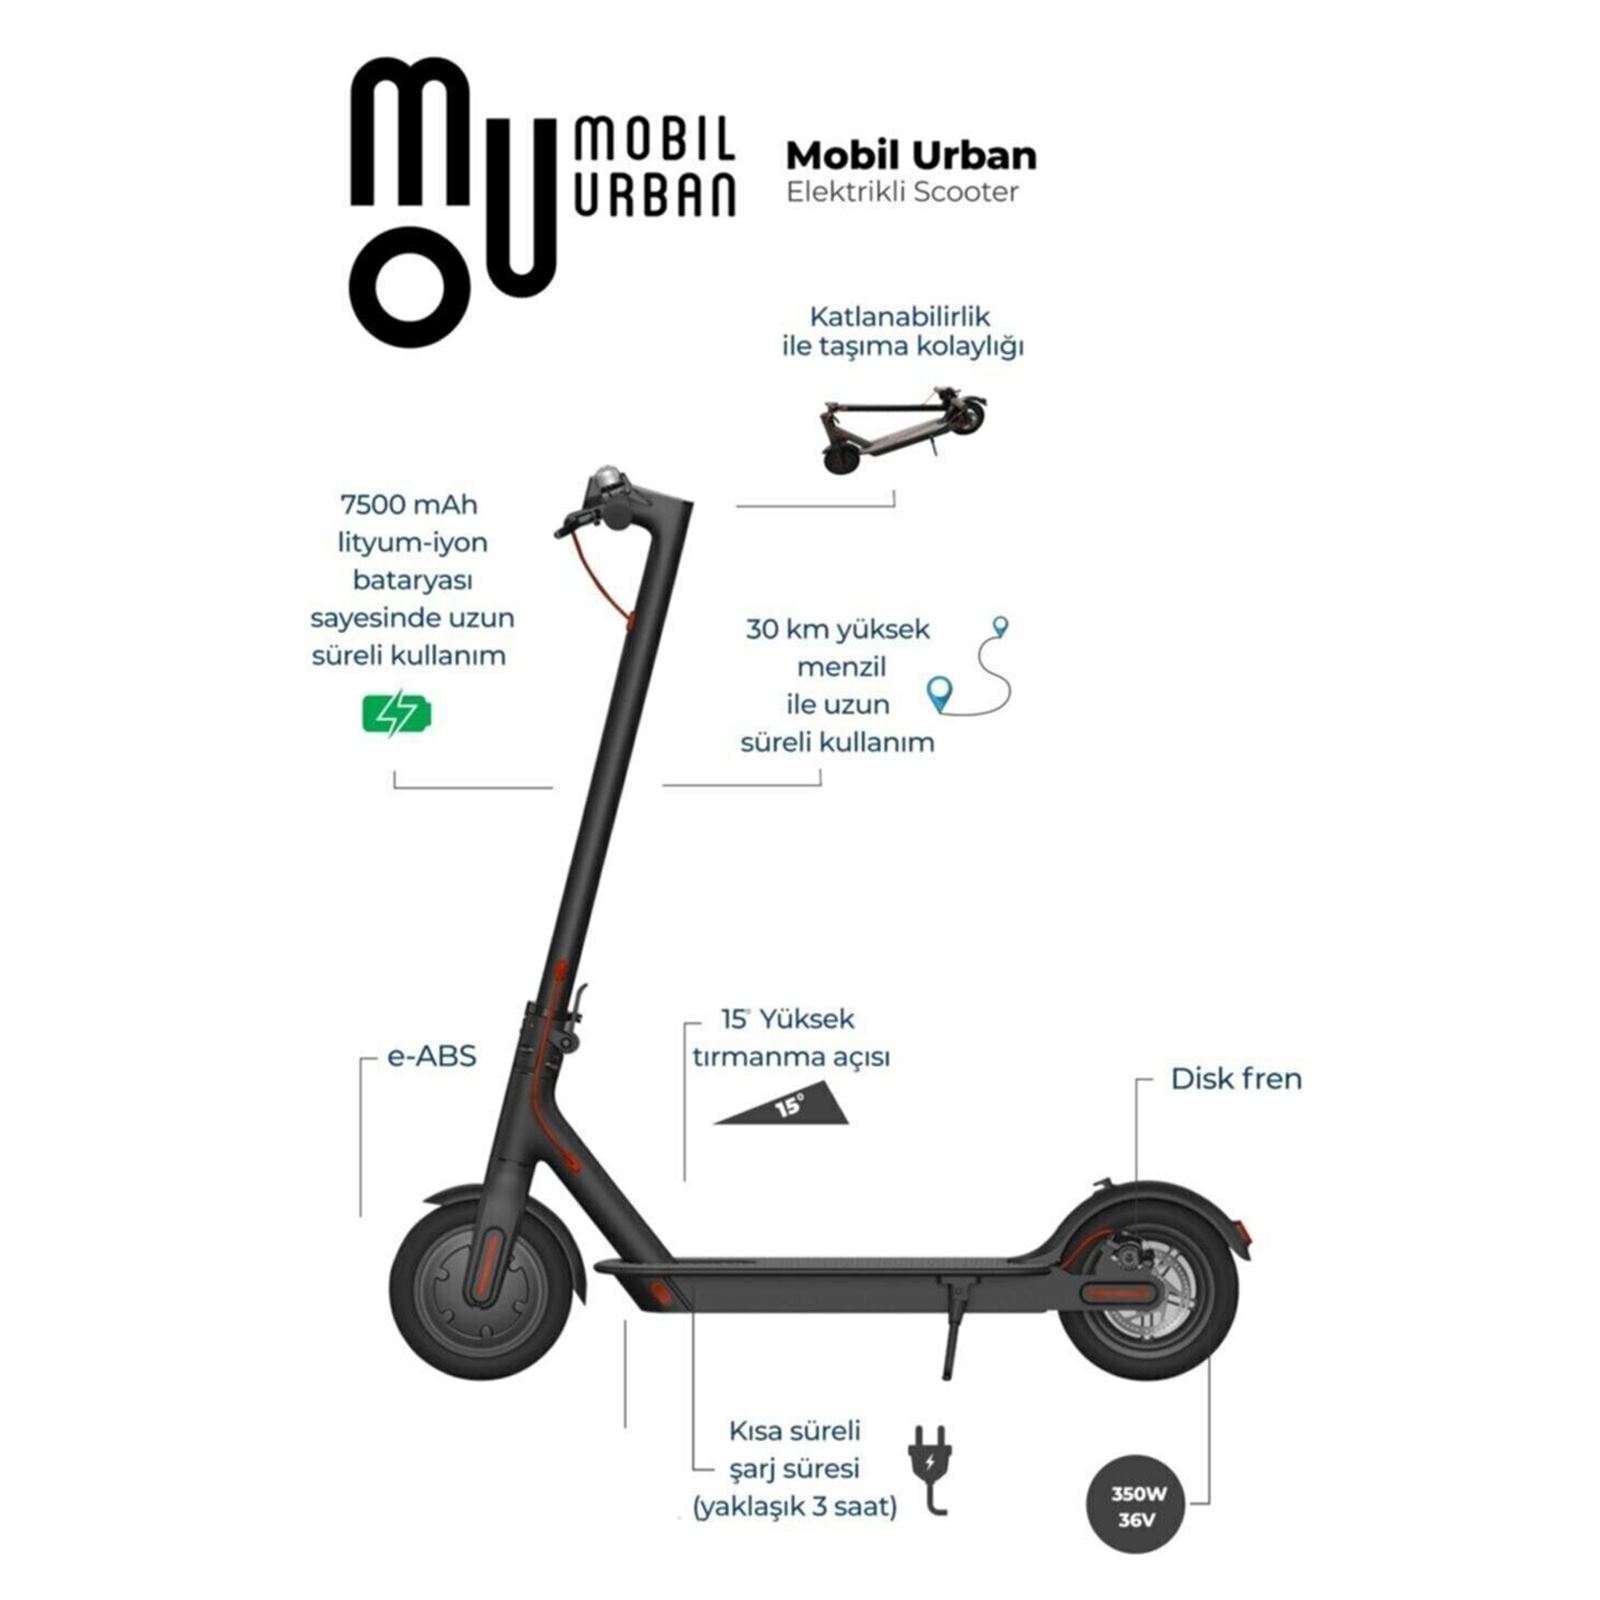 Goldmaster Mobil Urban Ego2 Katlanabilir Elektrikli Scooter